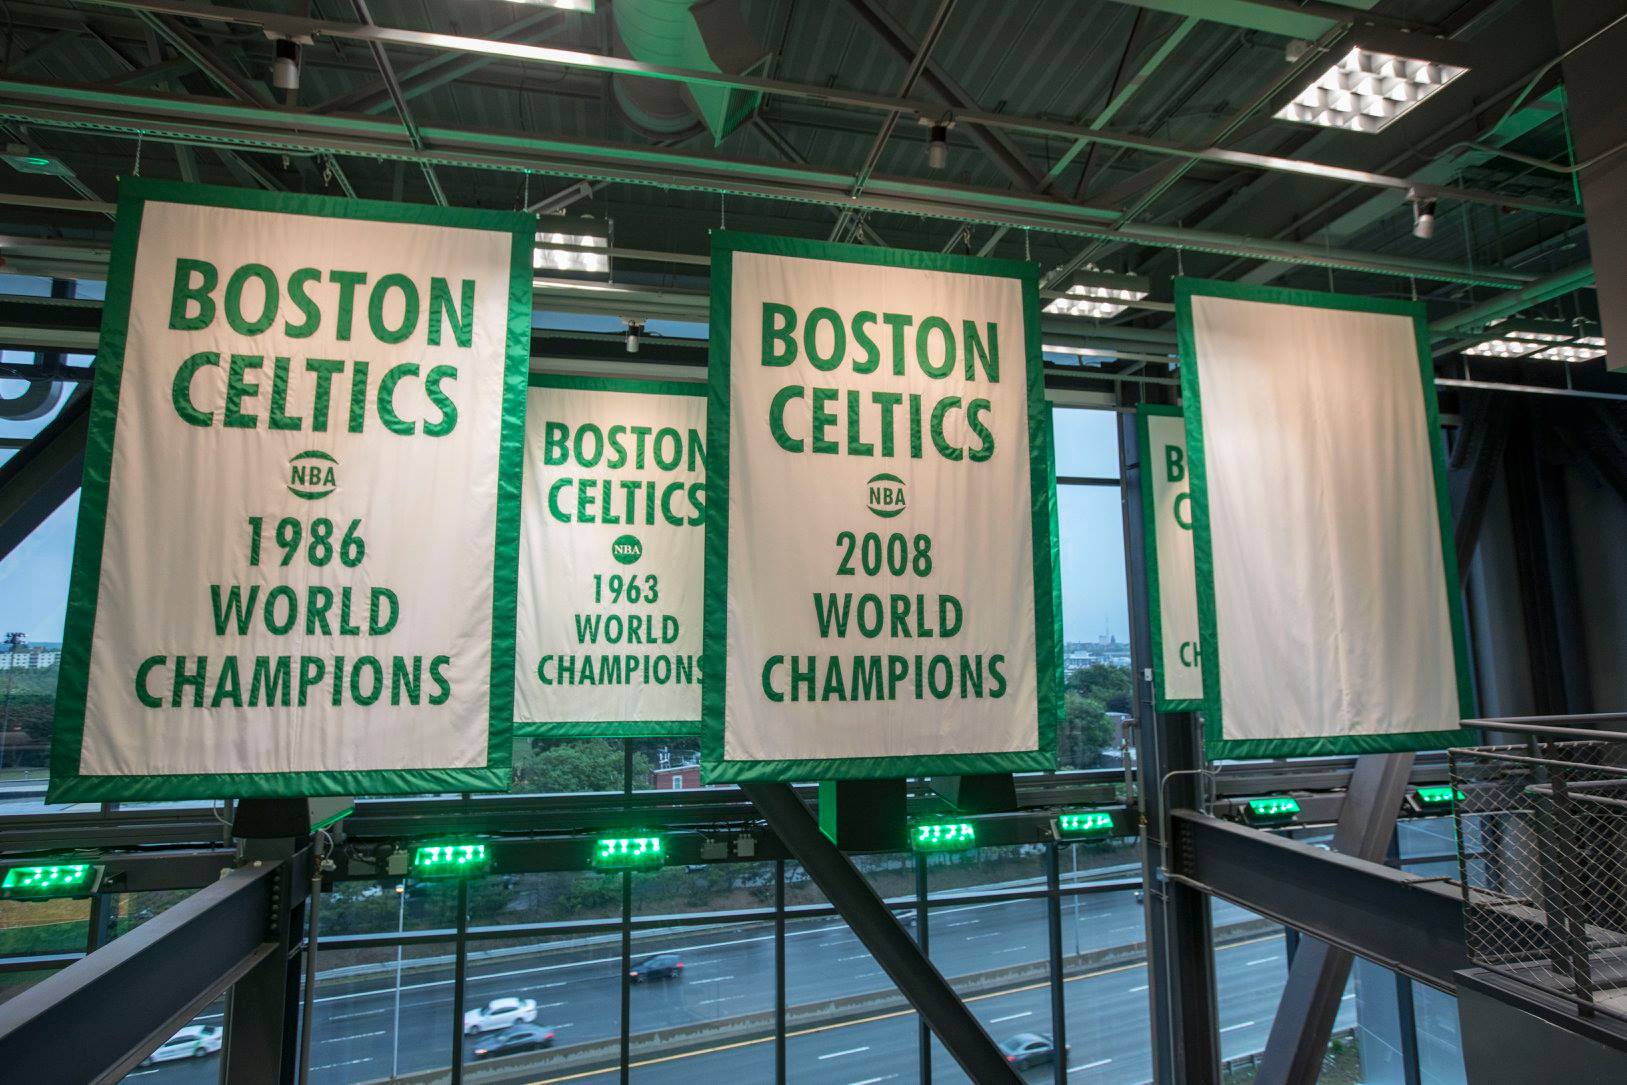 Catch All the Boston Celtics Games All Season Long on WTSN